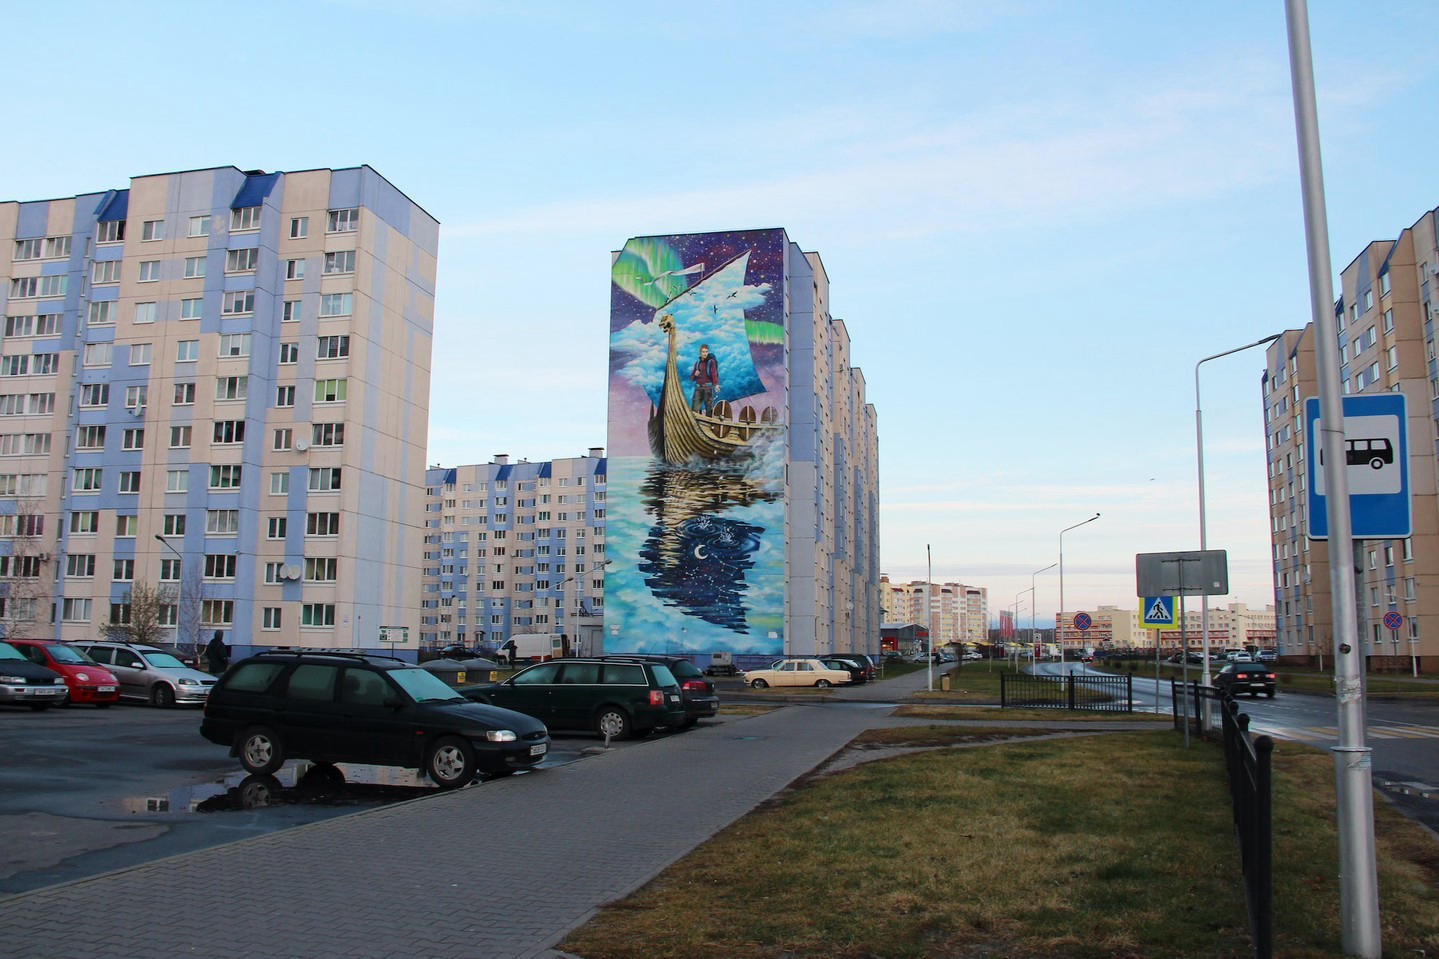 STREET ART PRESS | MAGAZINE - “The Way to a Dream” by Mutus in Pinsk, Belarus#graffiti #art #urbanar